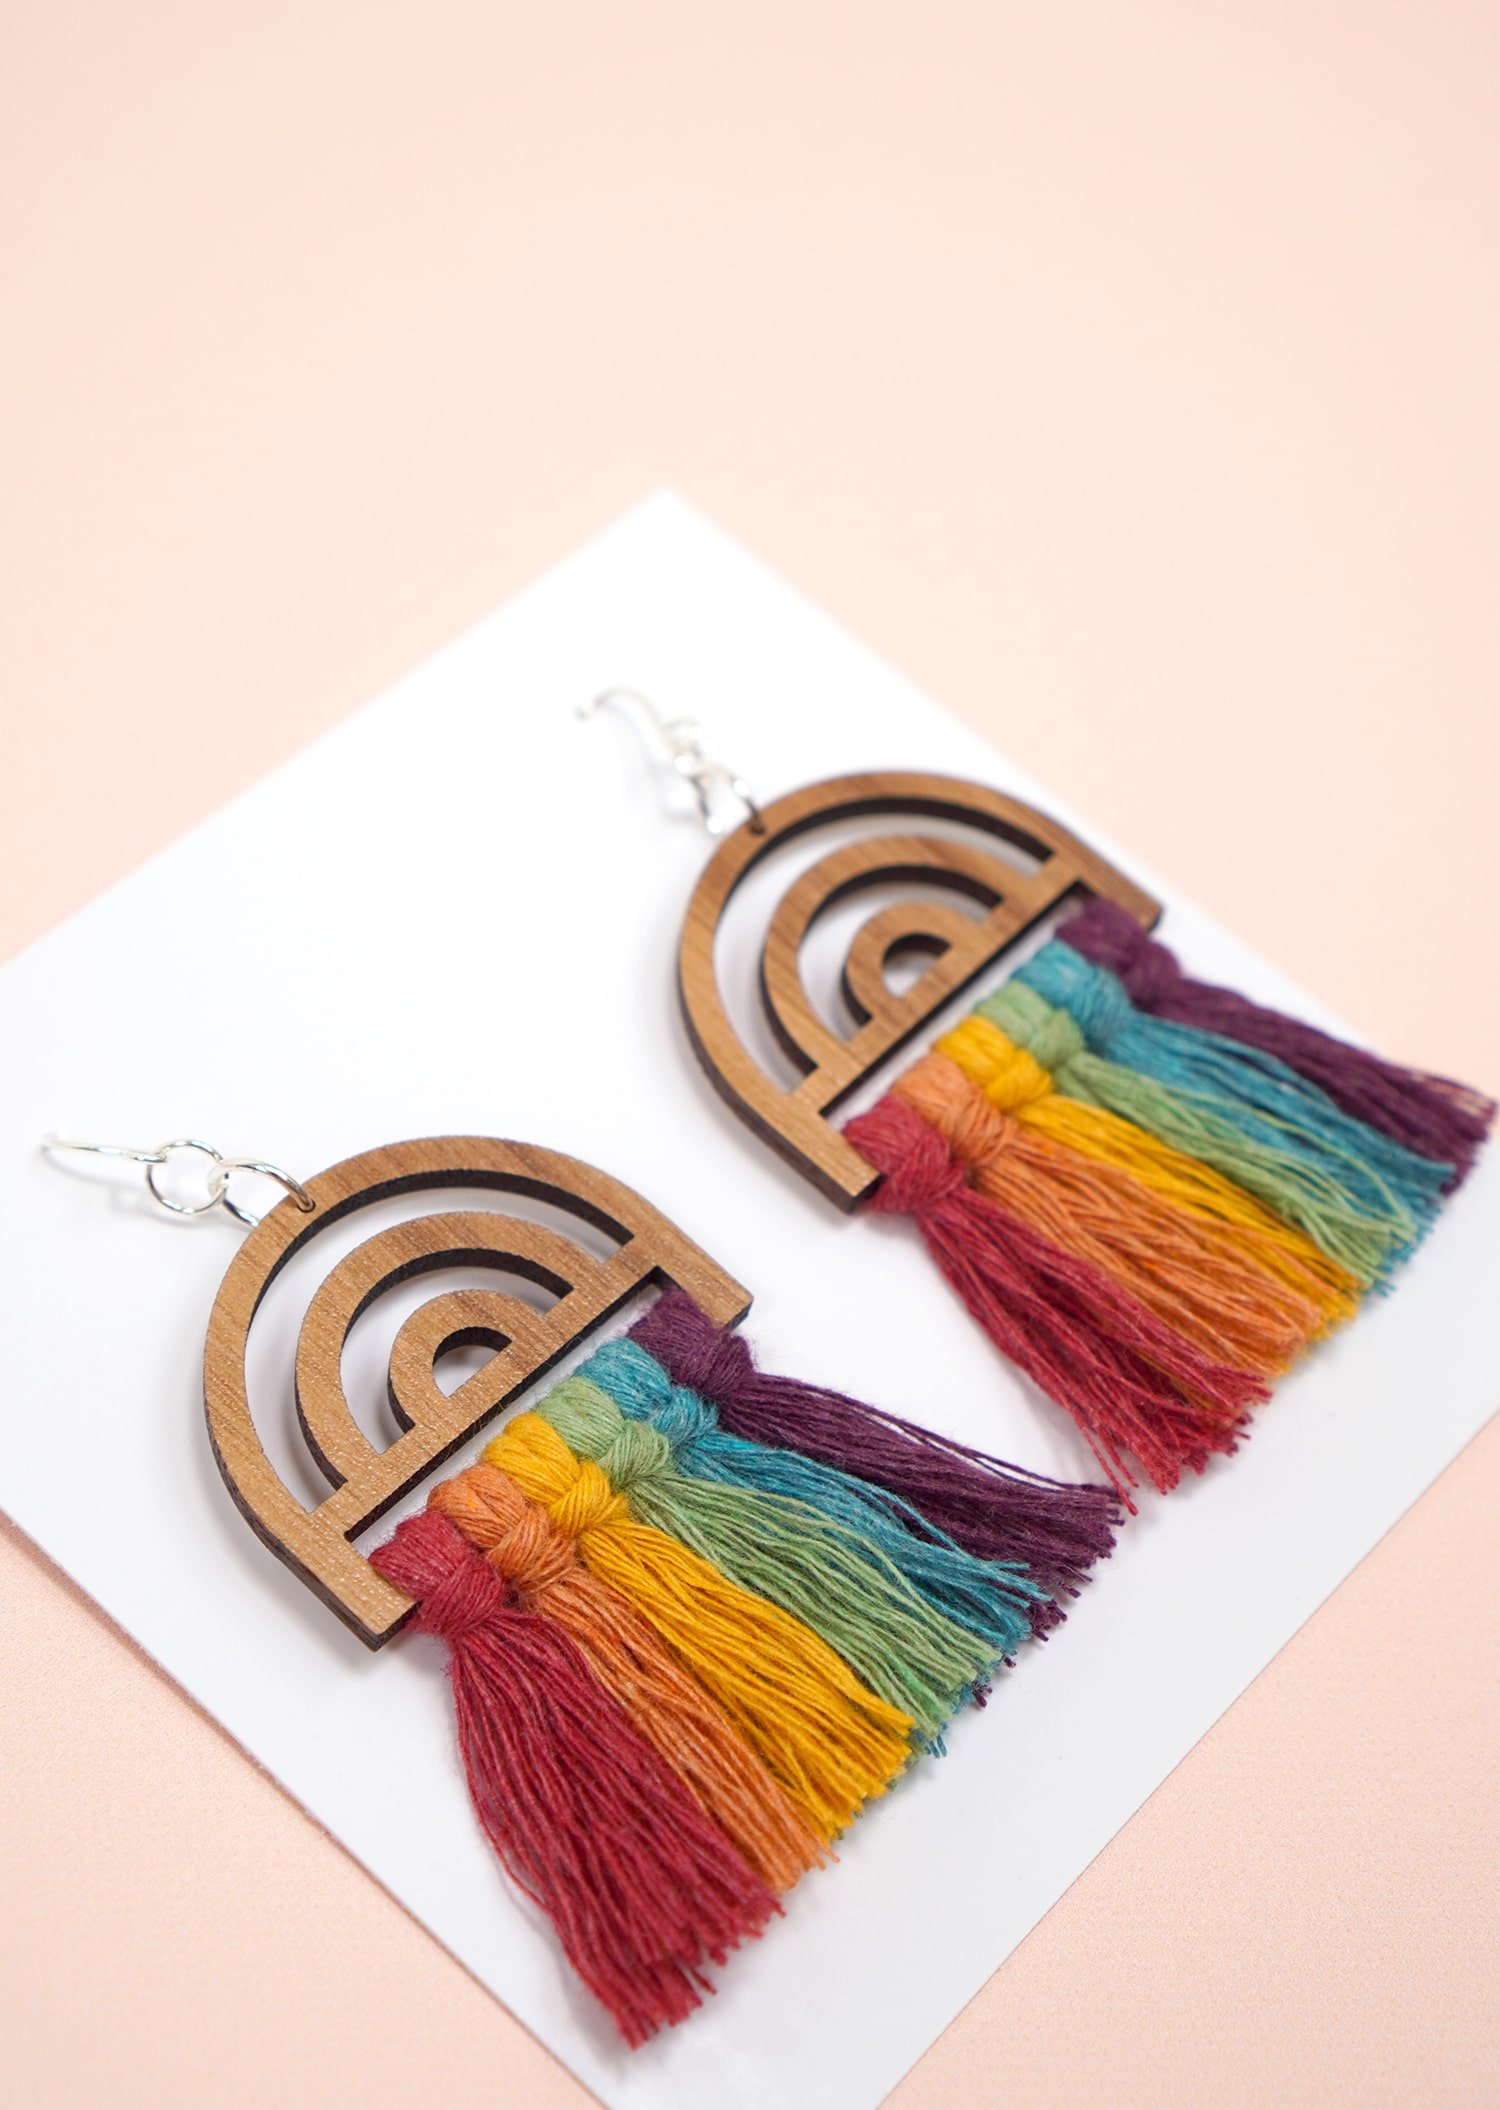 Rainbow Macrame Earrings with Wood Findings on peach background